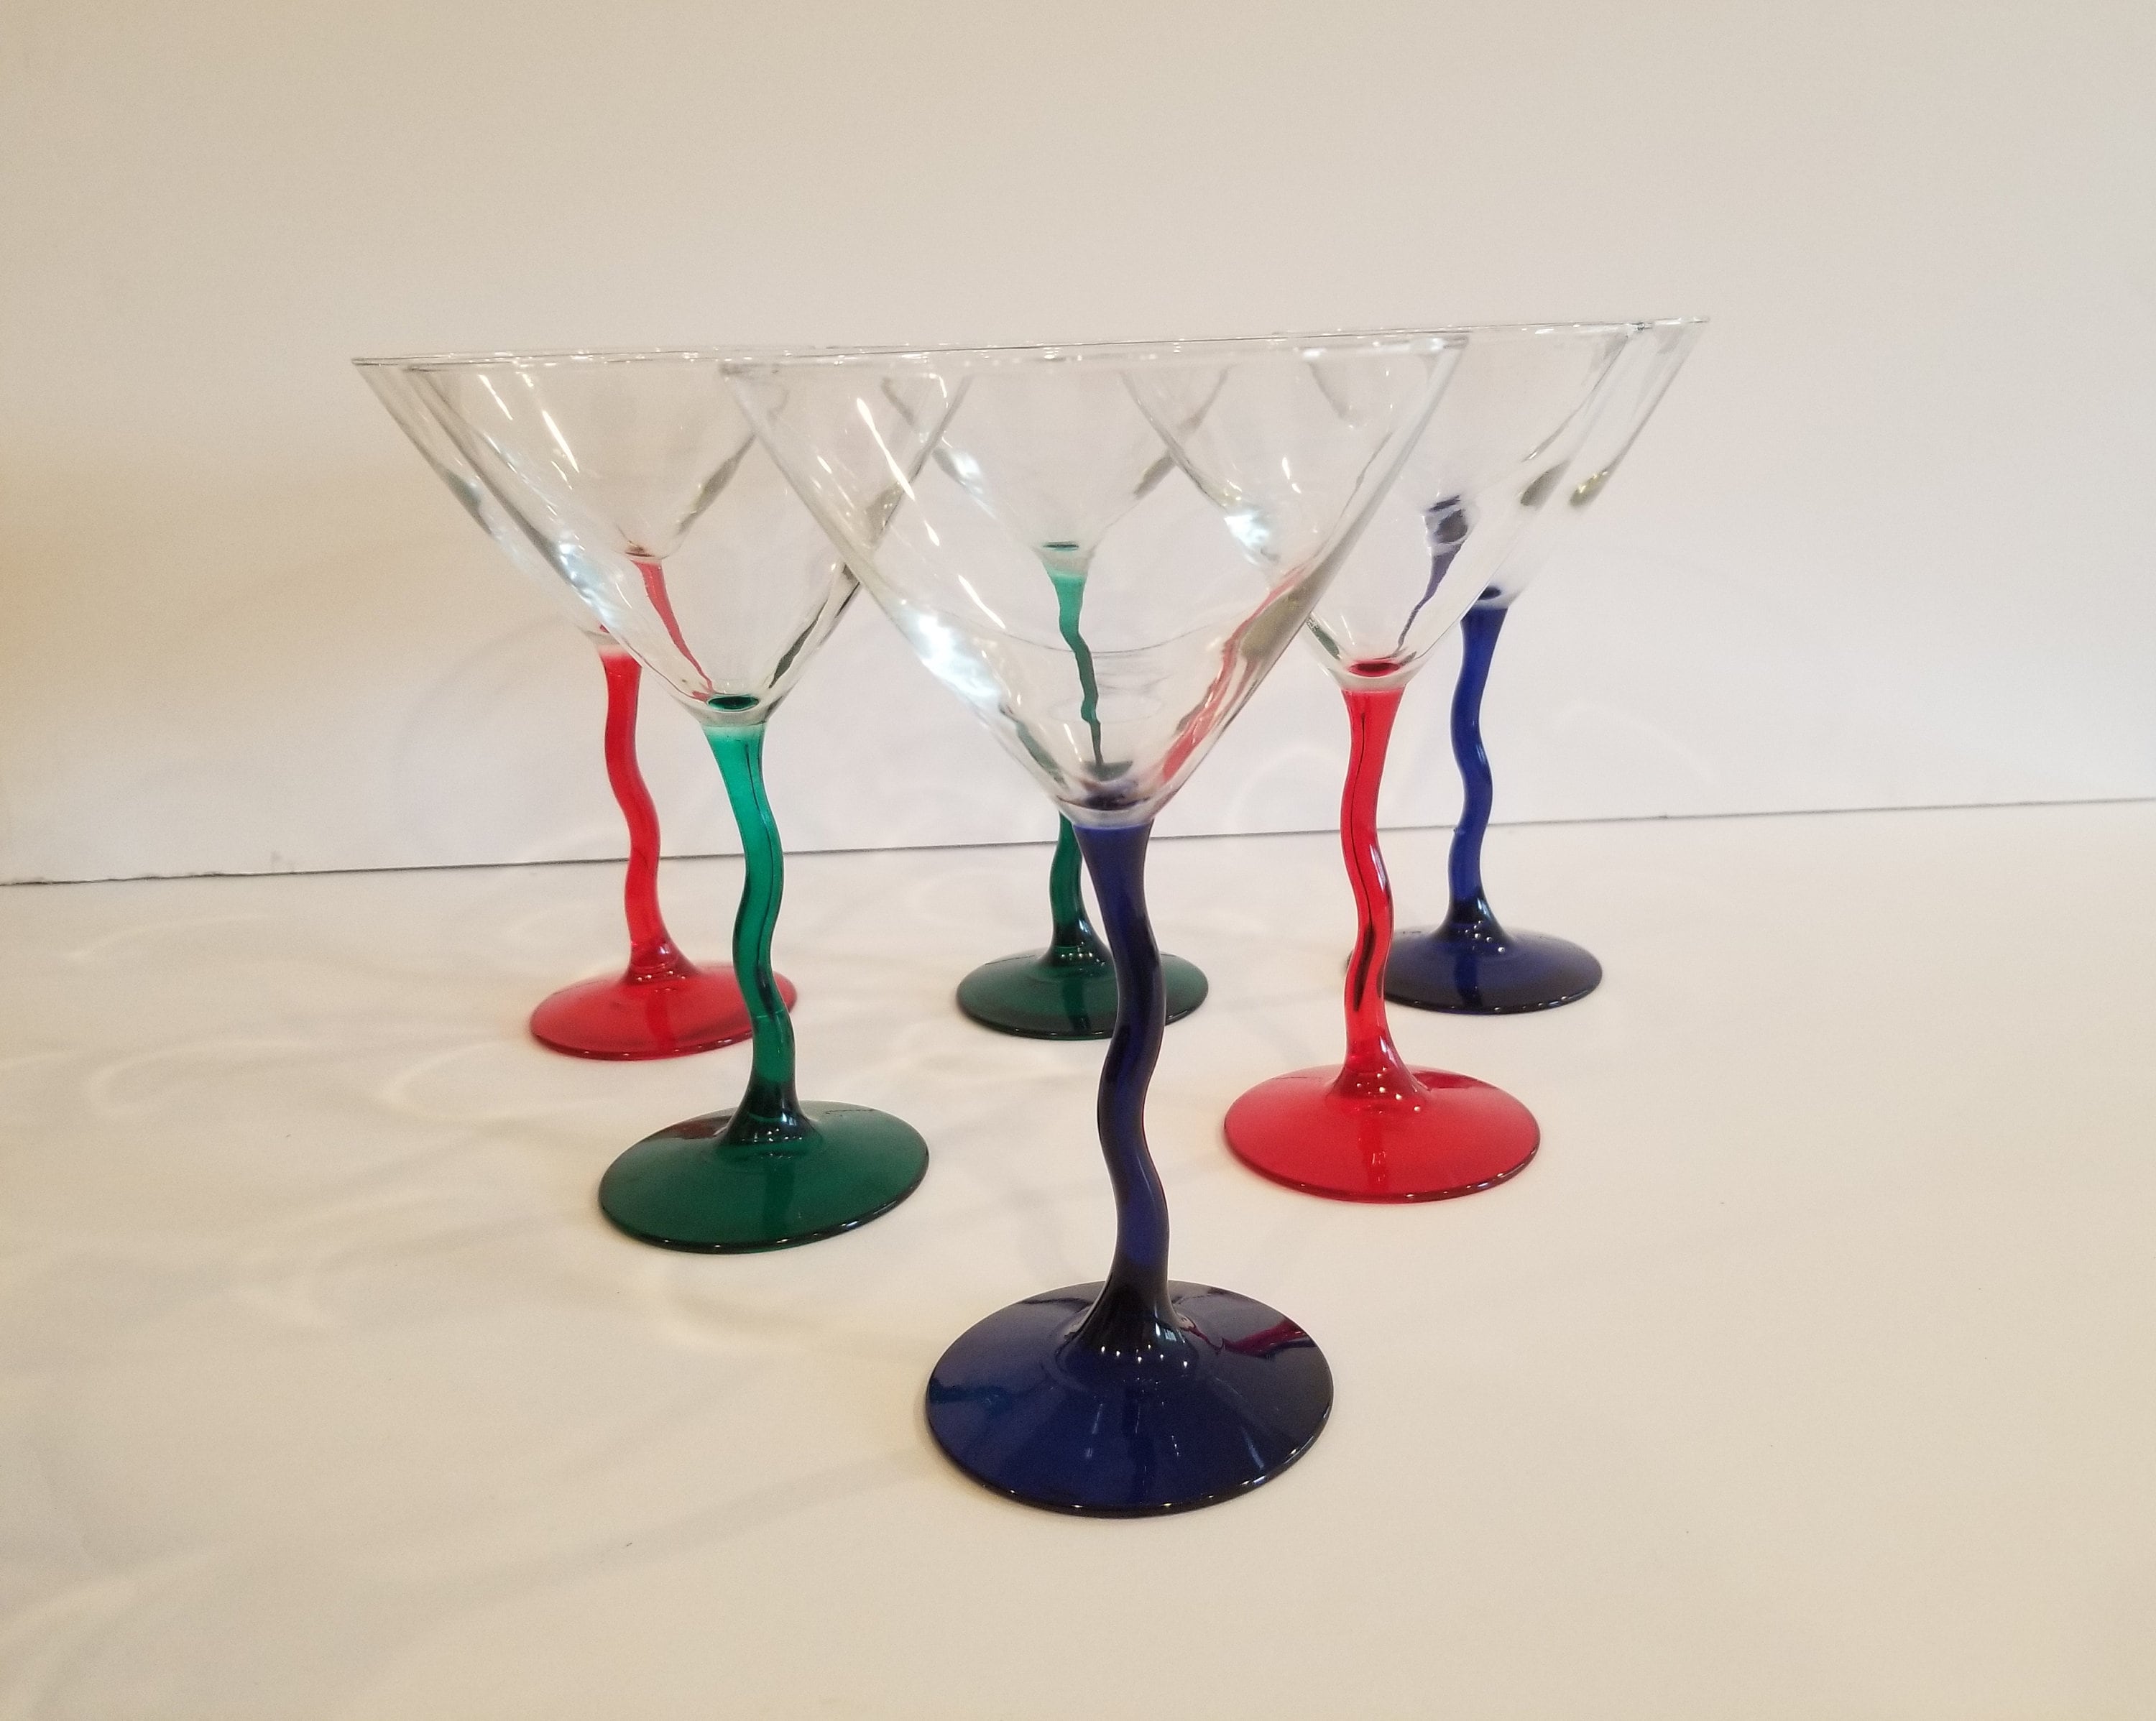 Vivid Set of 4 Martini Glasses, 10oz